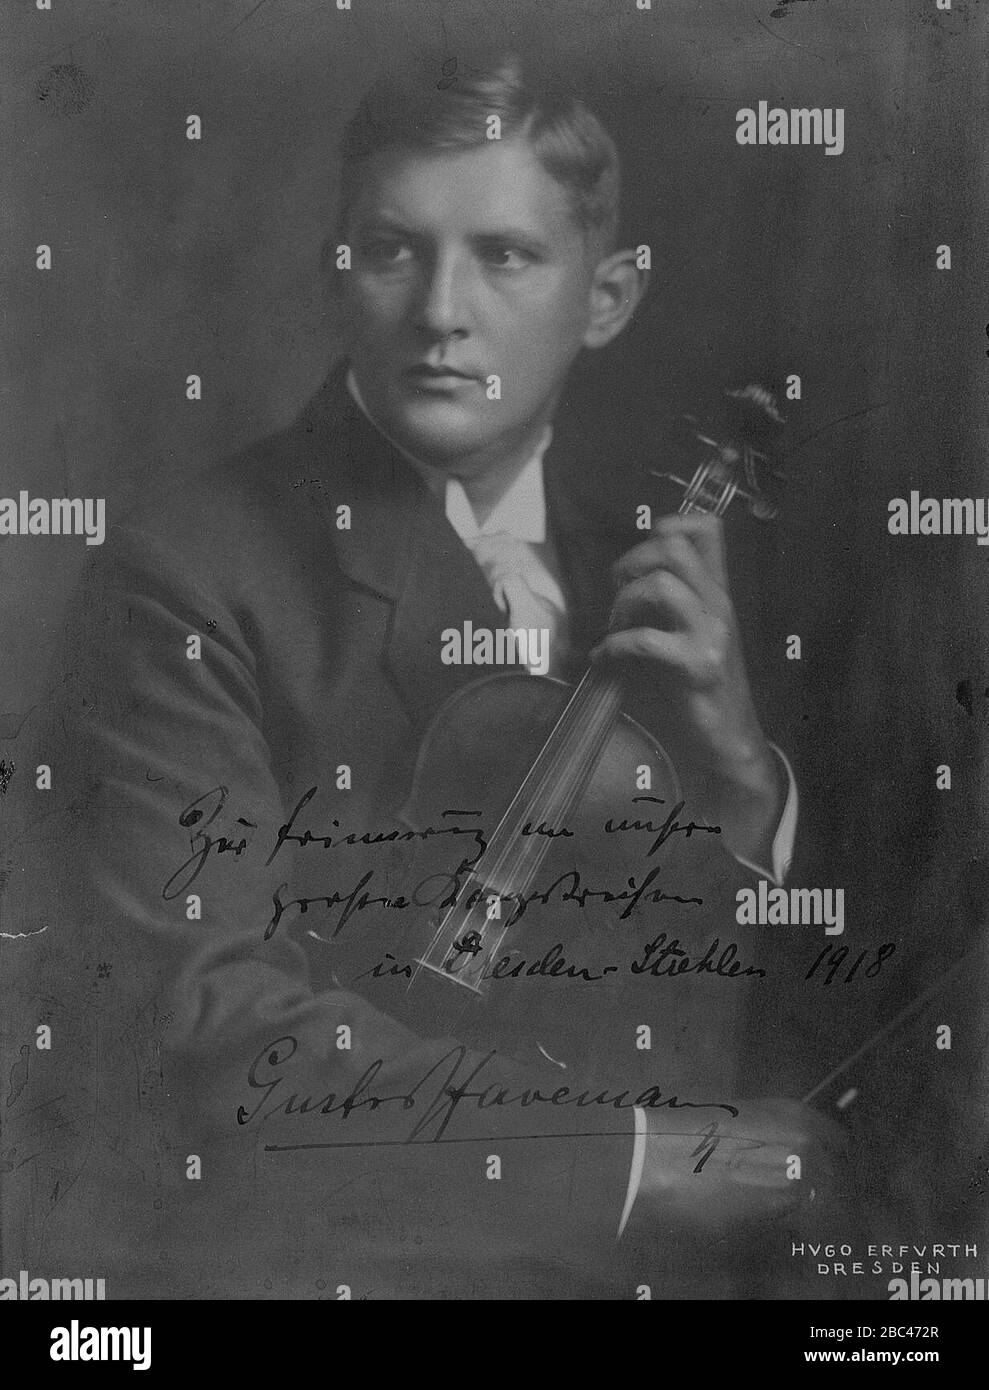 Gustav Havemann by Hugo Erfurth, c. 1915. Stock Photo